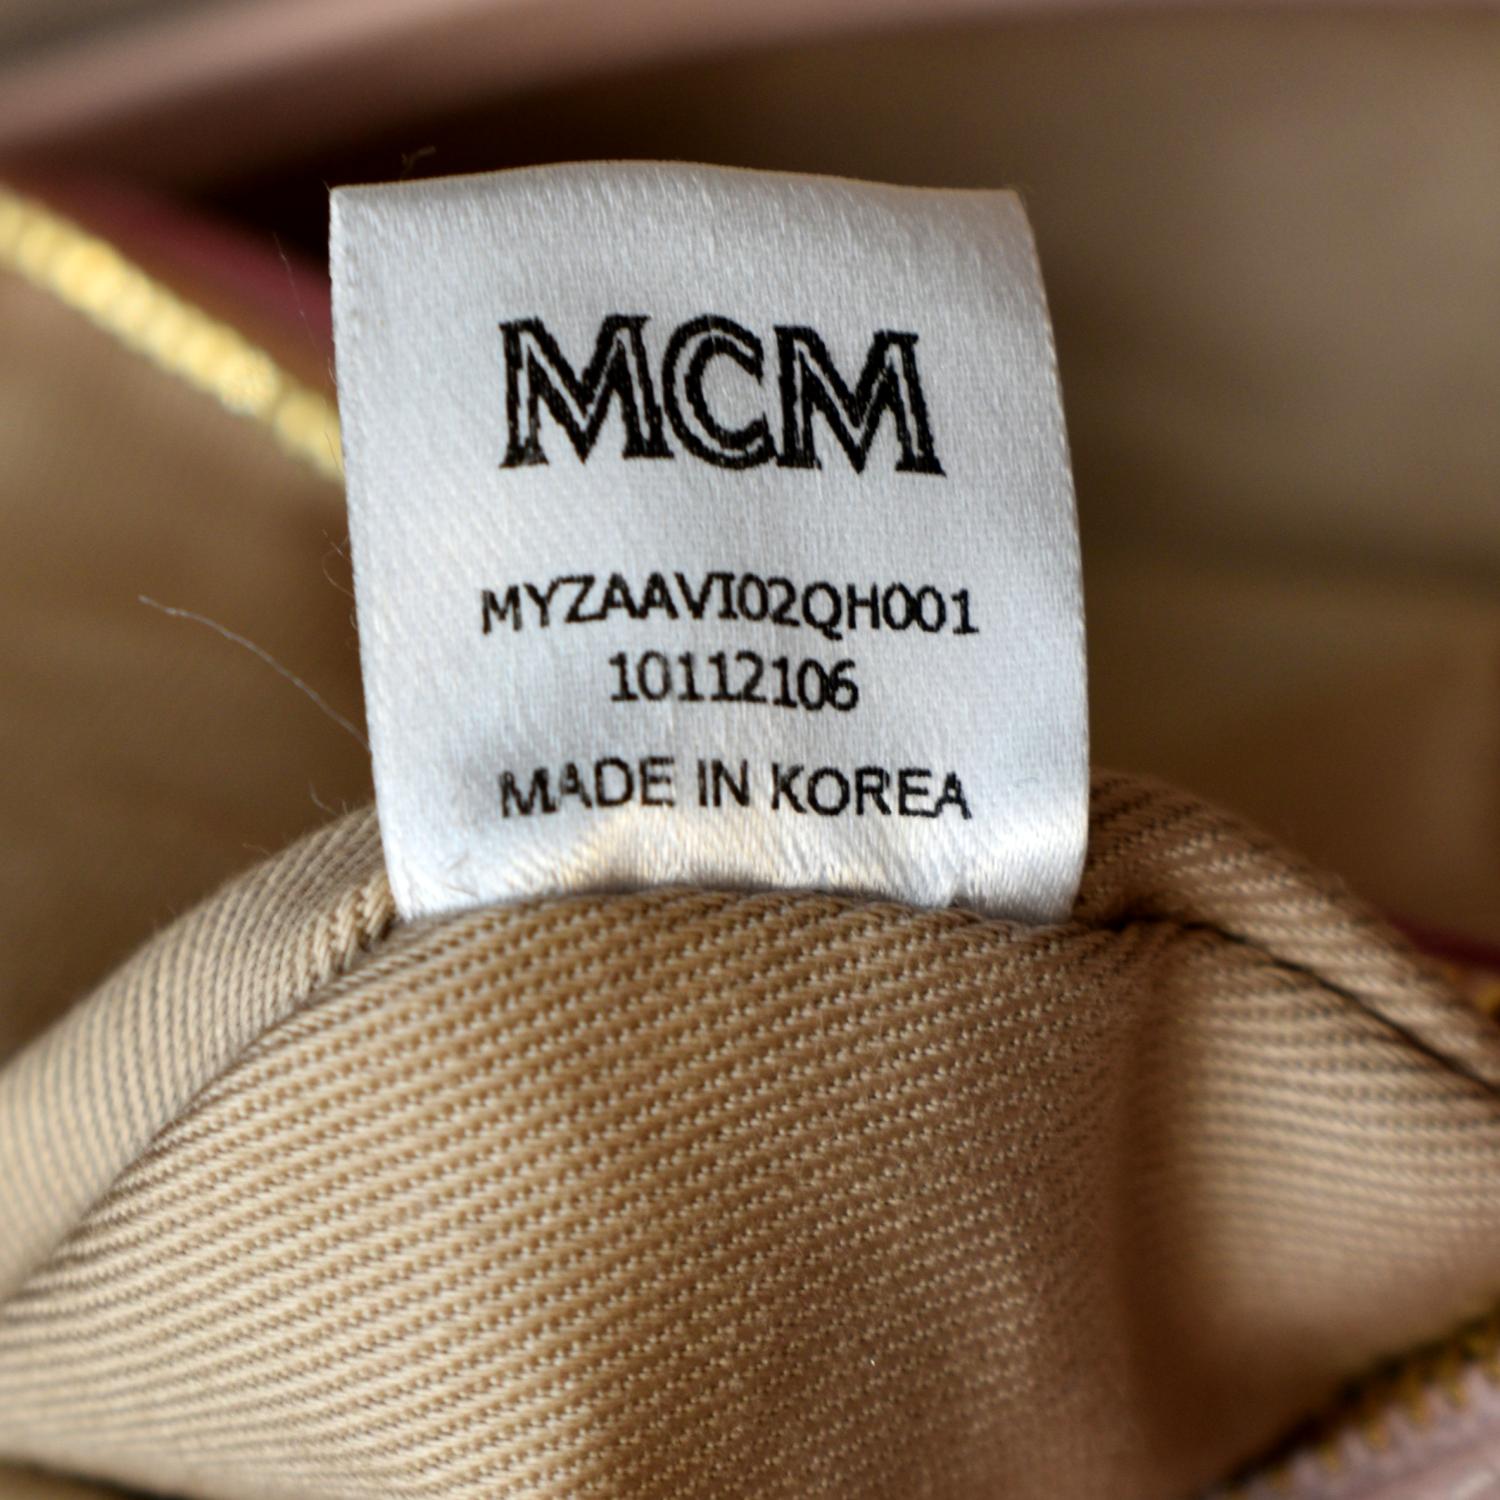 Mcm authentic made in korea